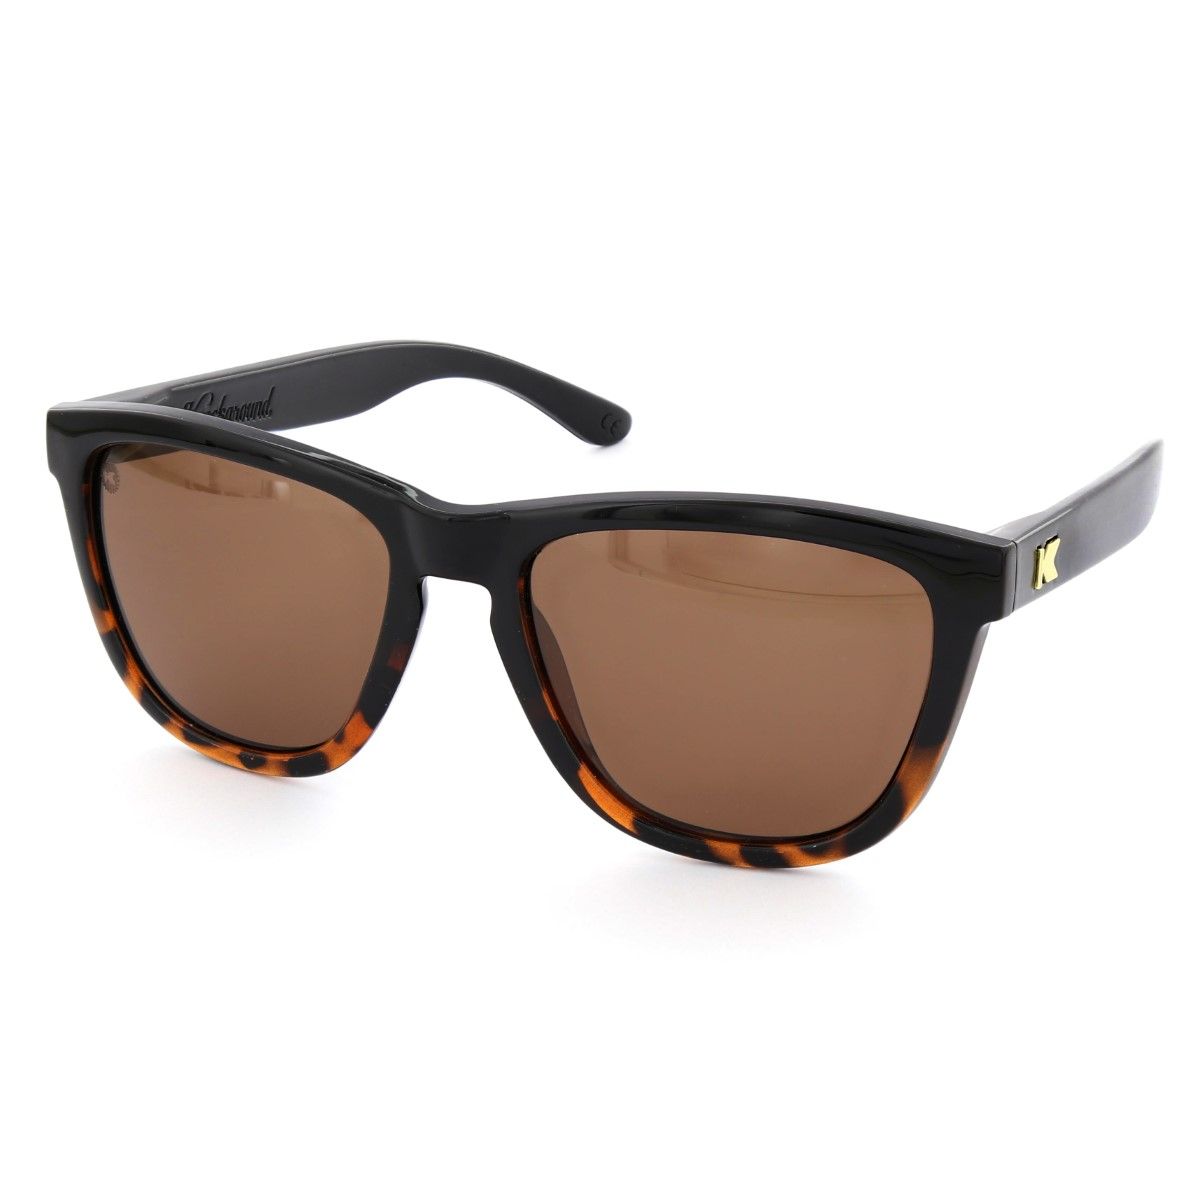 Knockaround Glossy Black And Tortoise Shell Fade/Polarized Amber Premiums Unisex Sunglasses